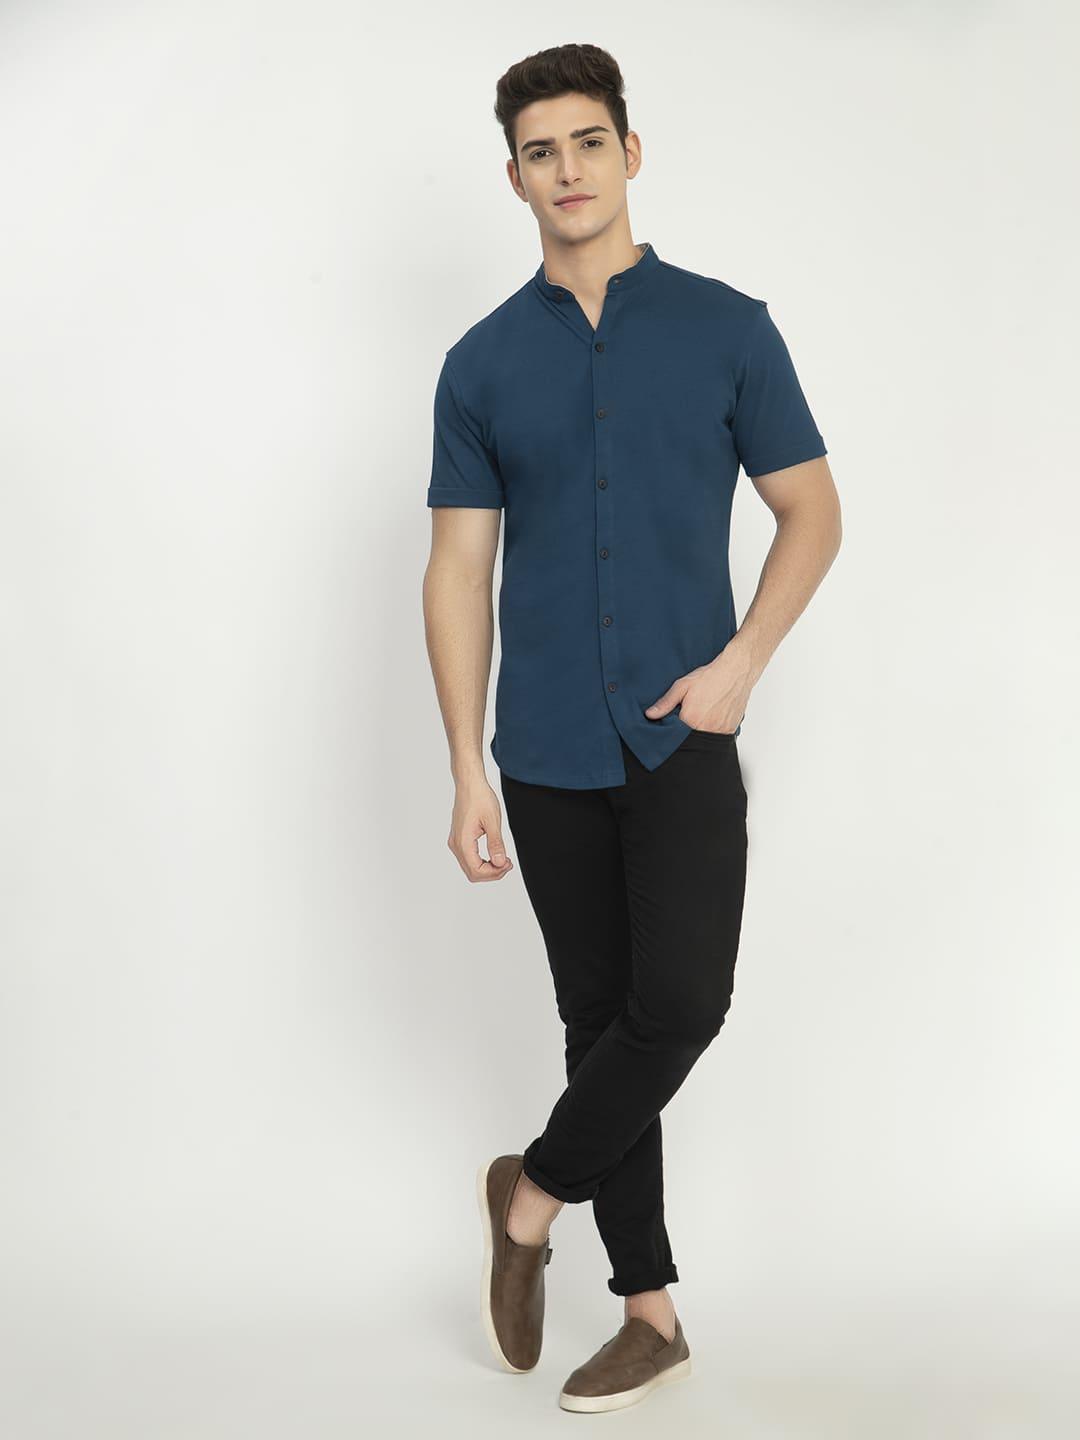 Men's Solid Knit Mandarin Collar Shirt